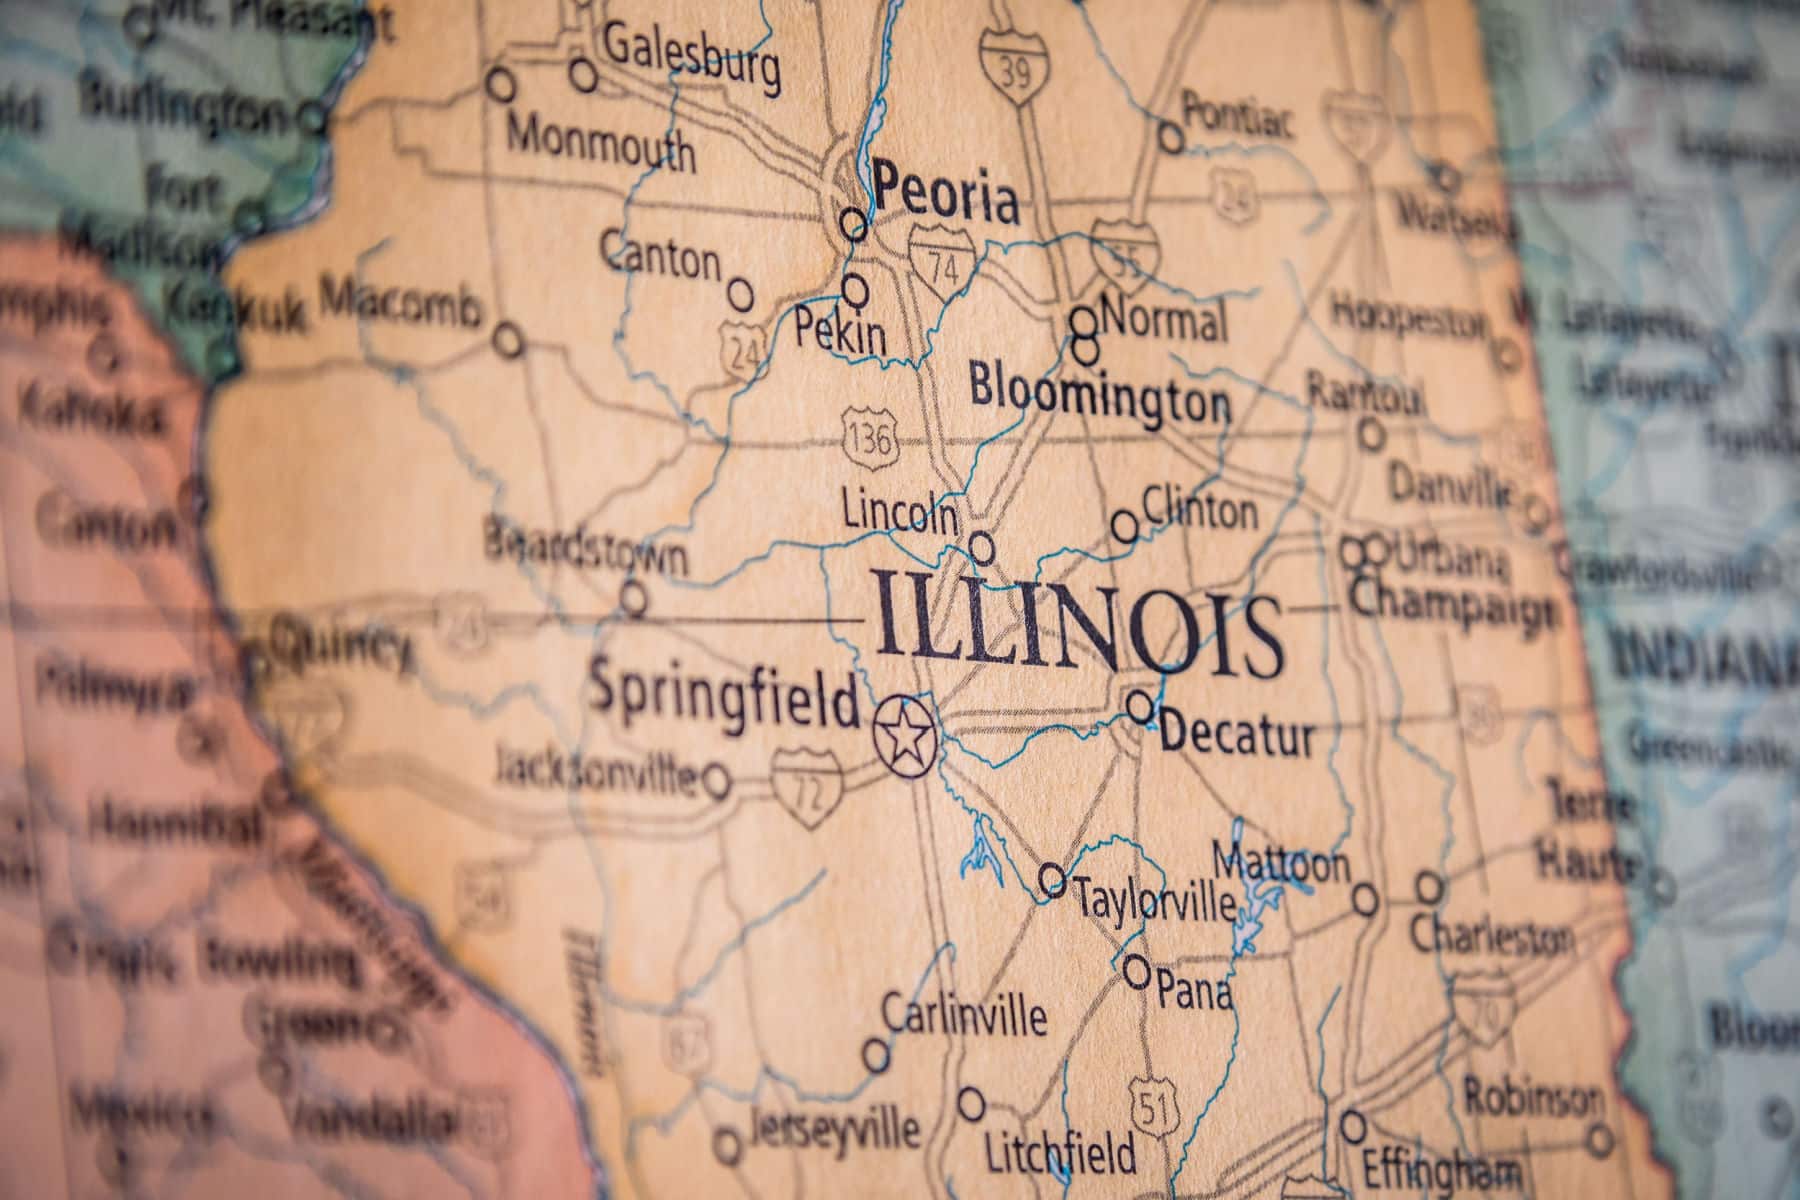 Illinois Landmarks